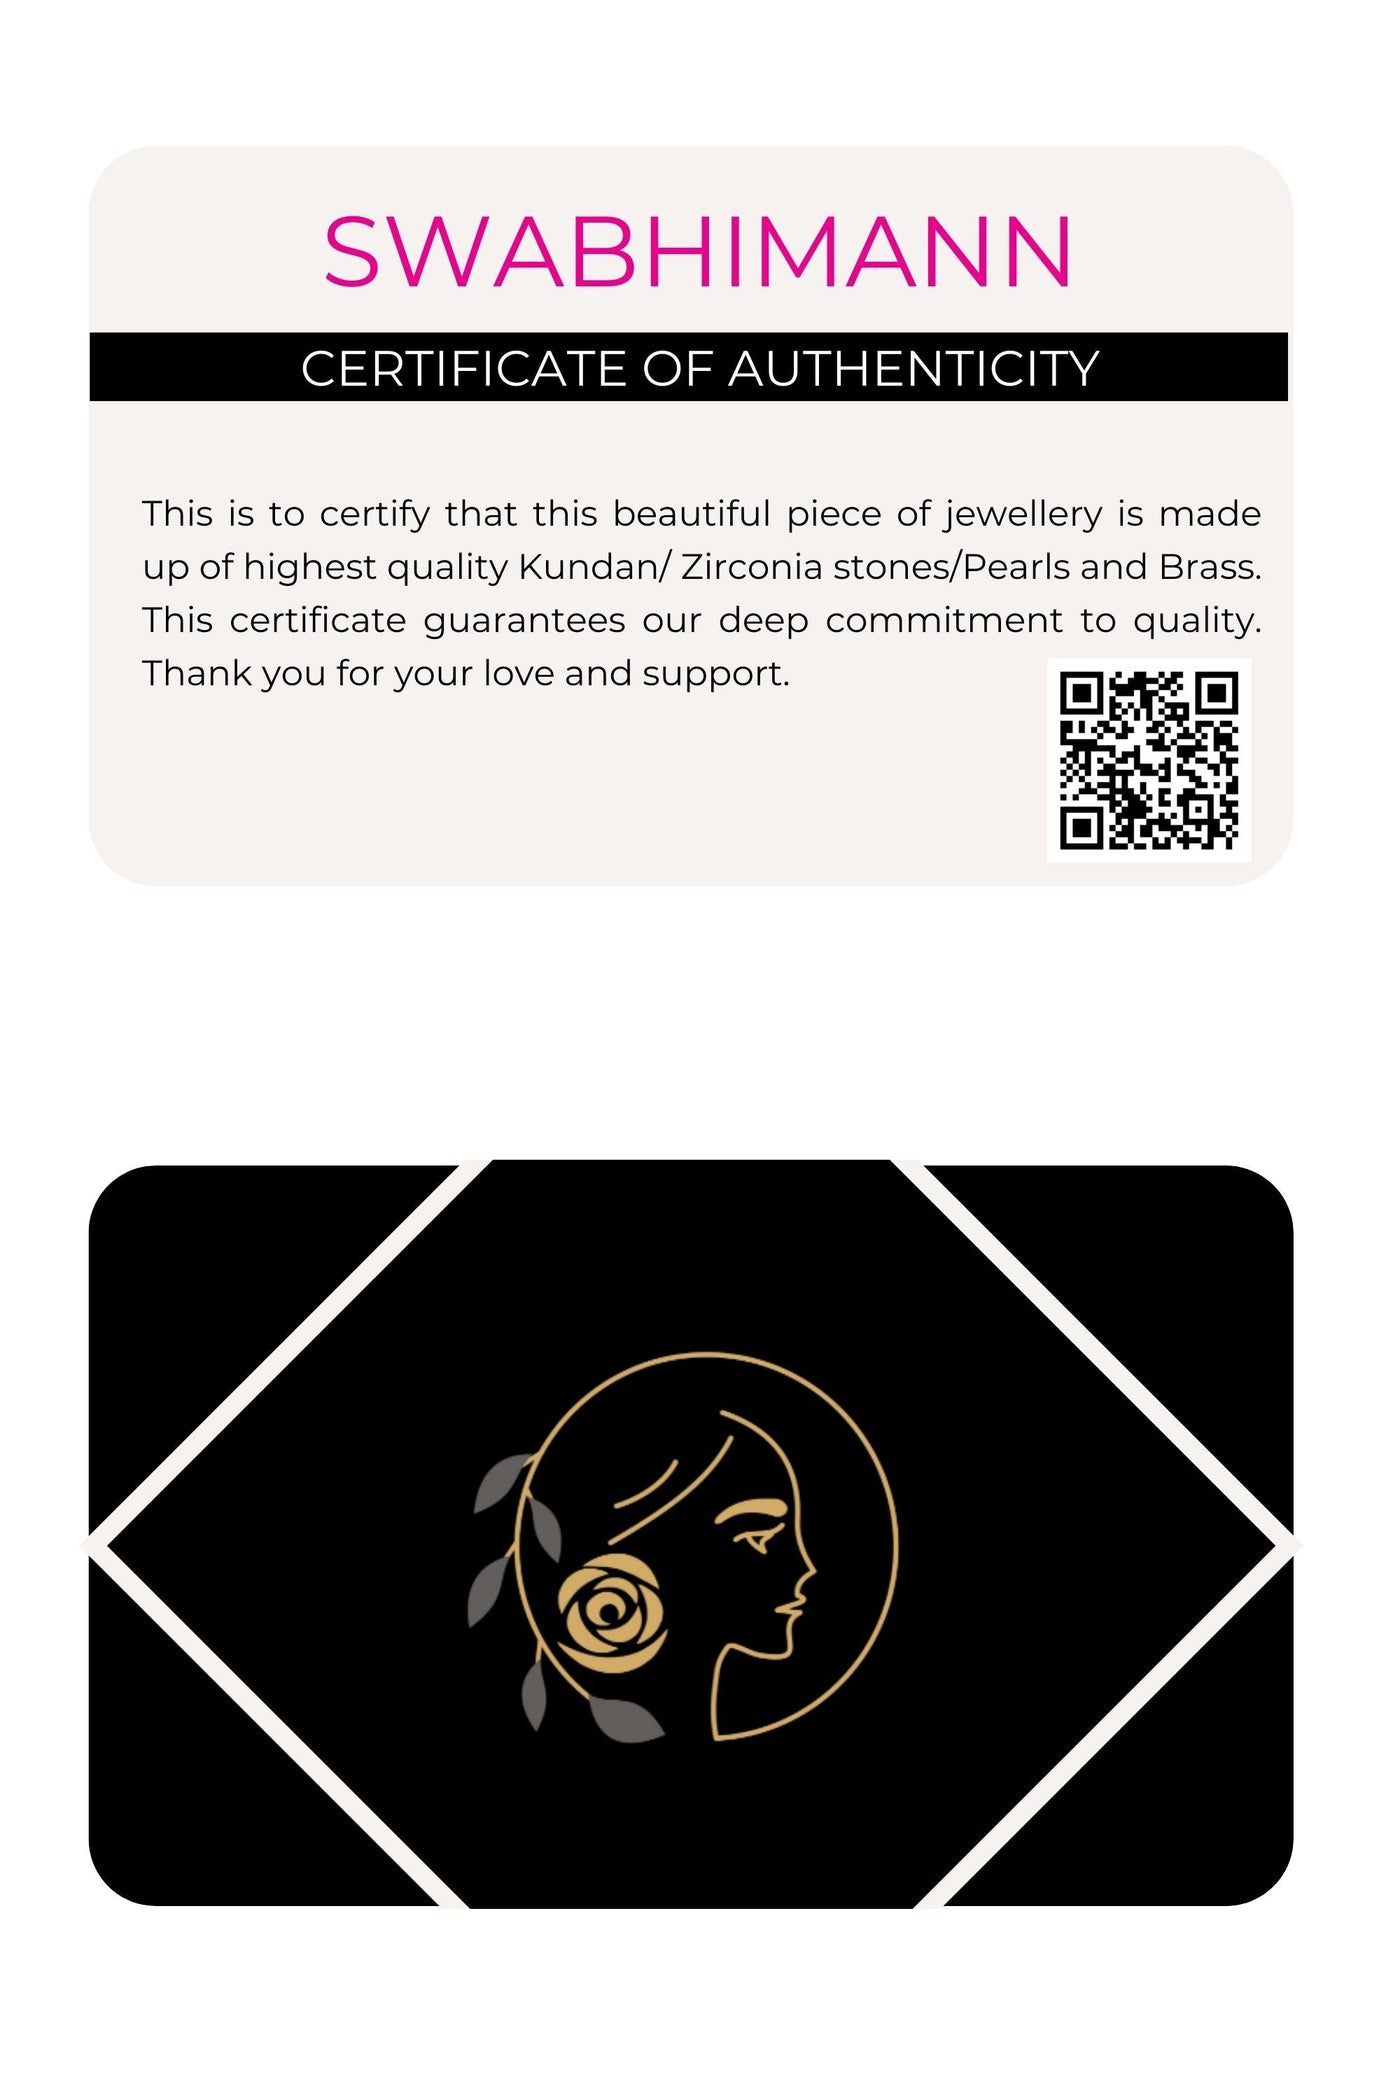 Swabhimann jewellery's certificate of authenticity.